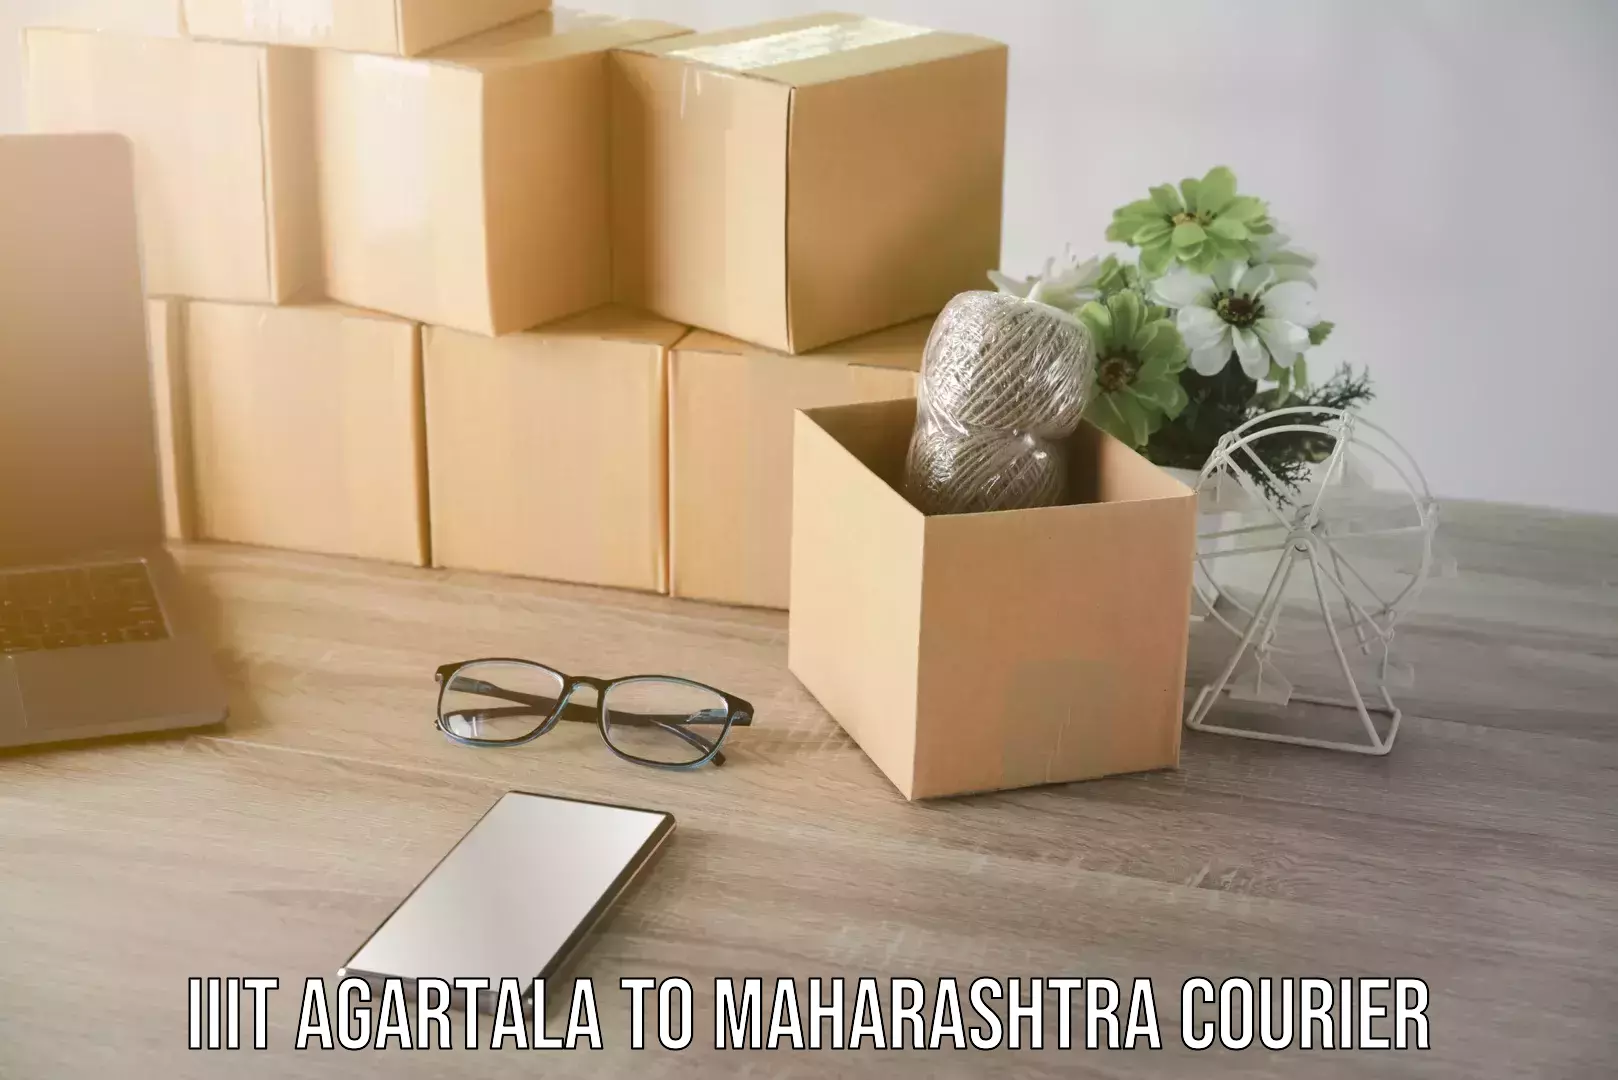 Customer-friendly courier services IIIT Agartala to Maharashtra